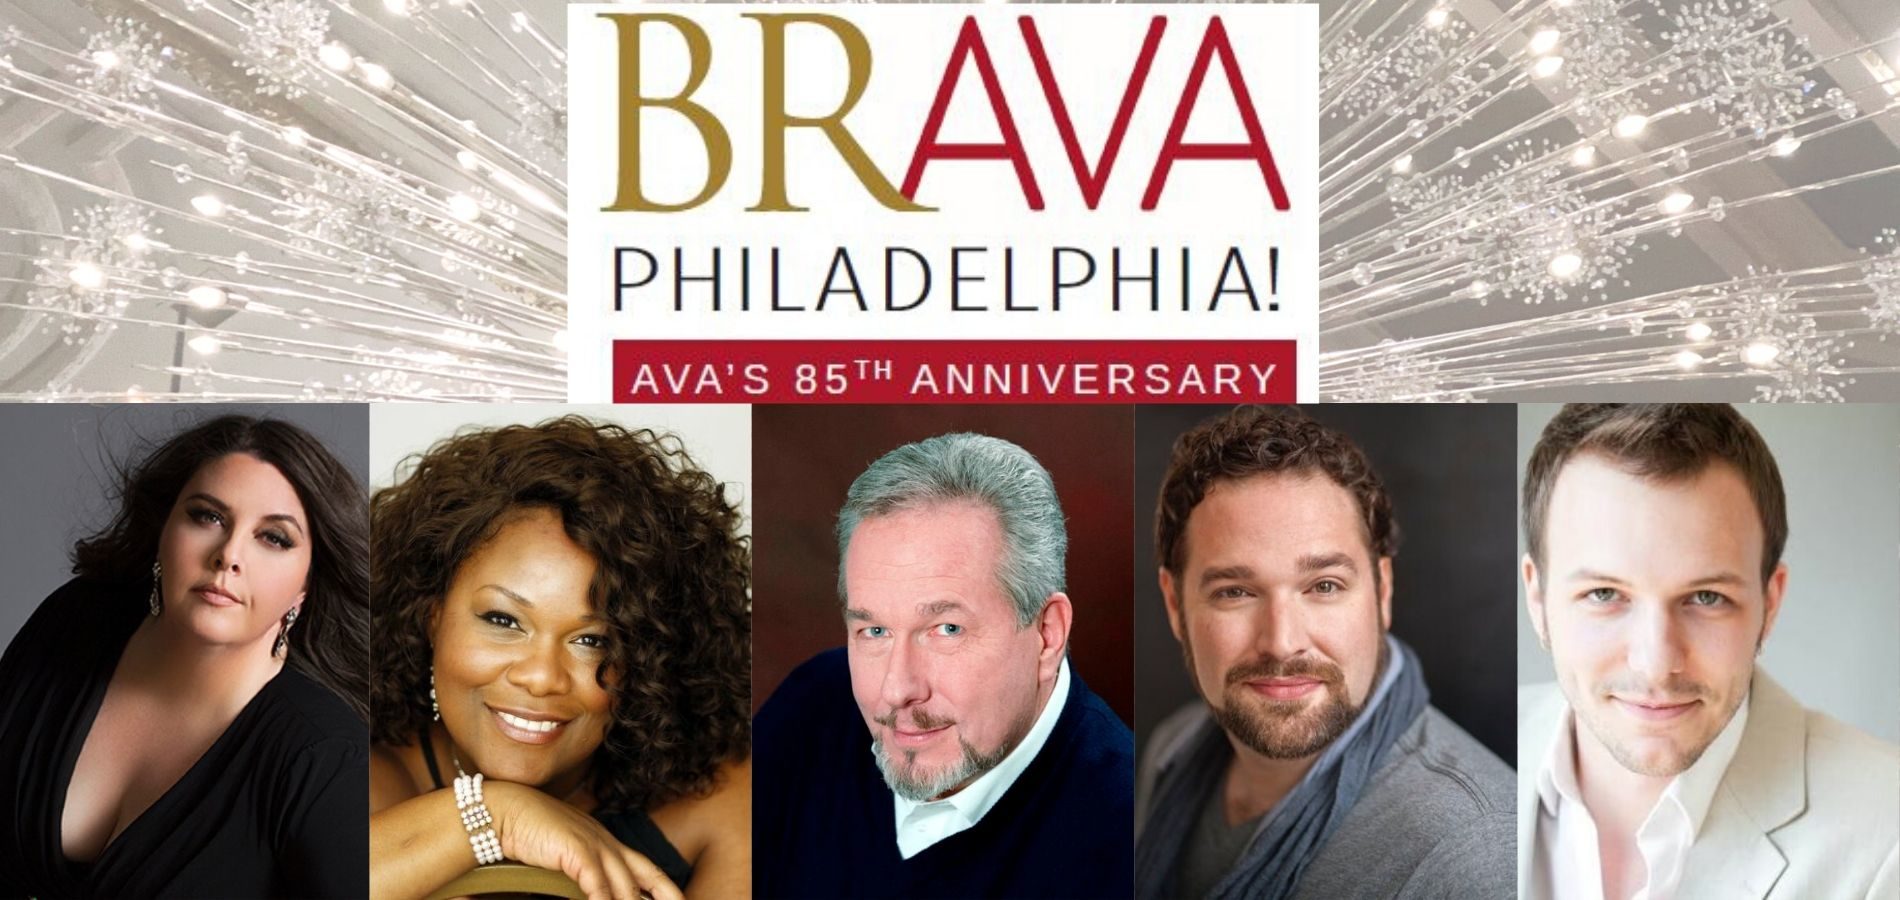 BRAVA Philadelphia – AVA’s 85th Anniversary